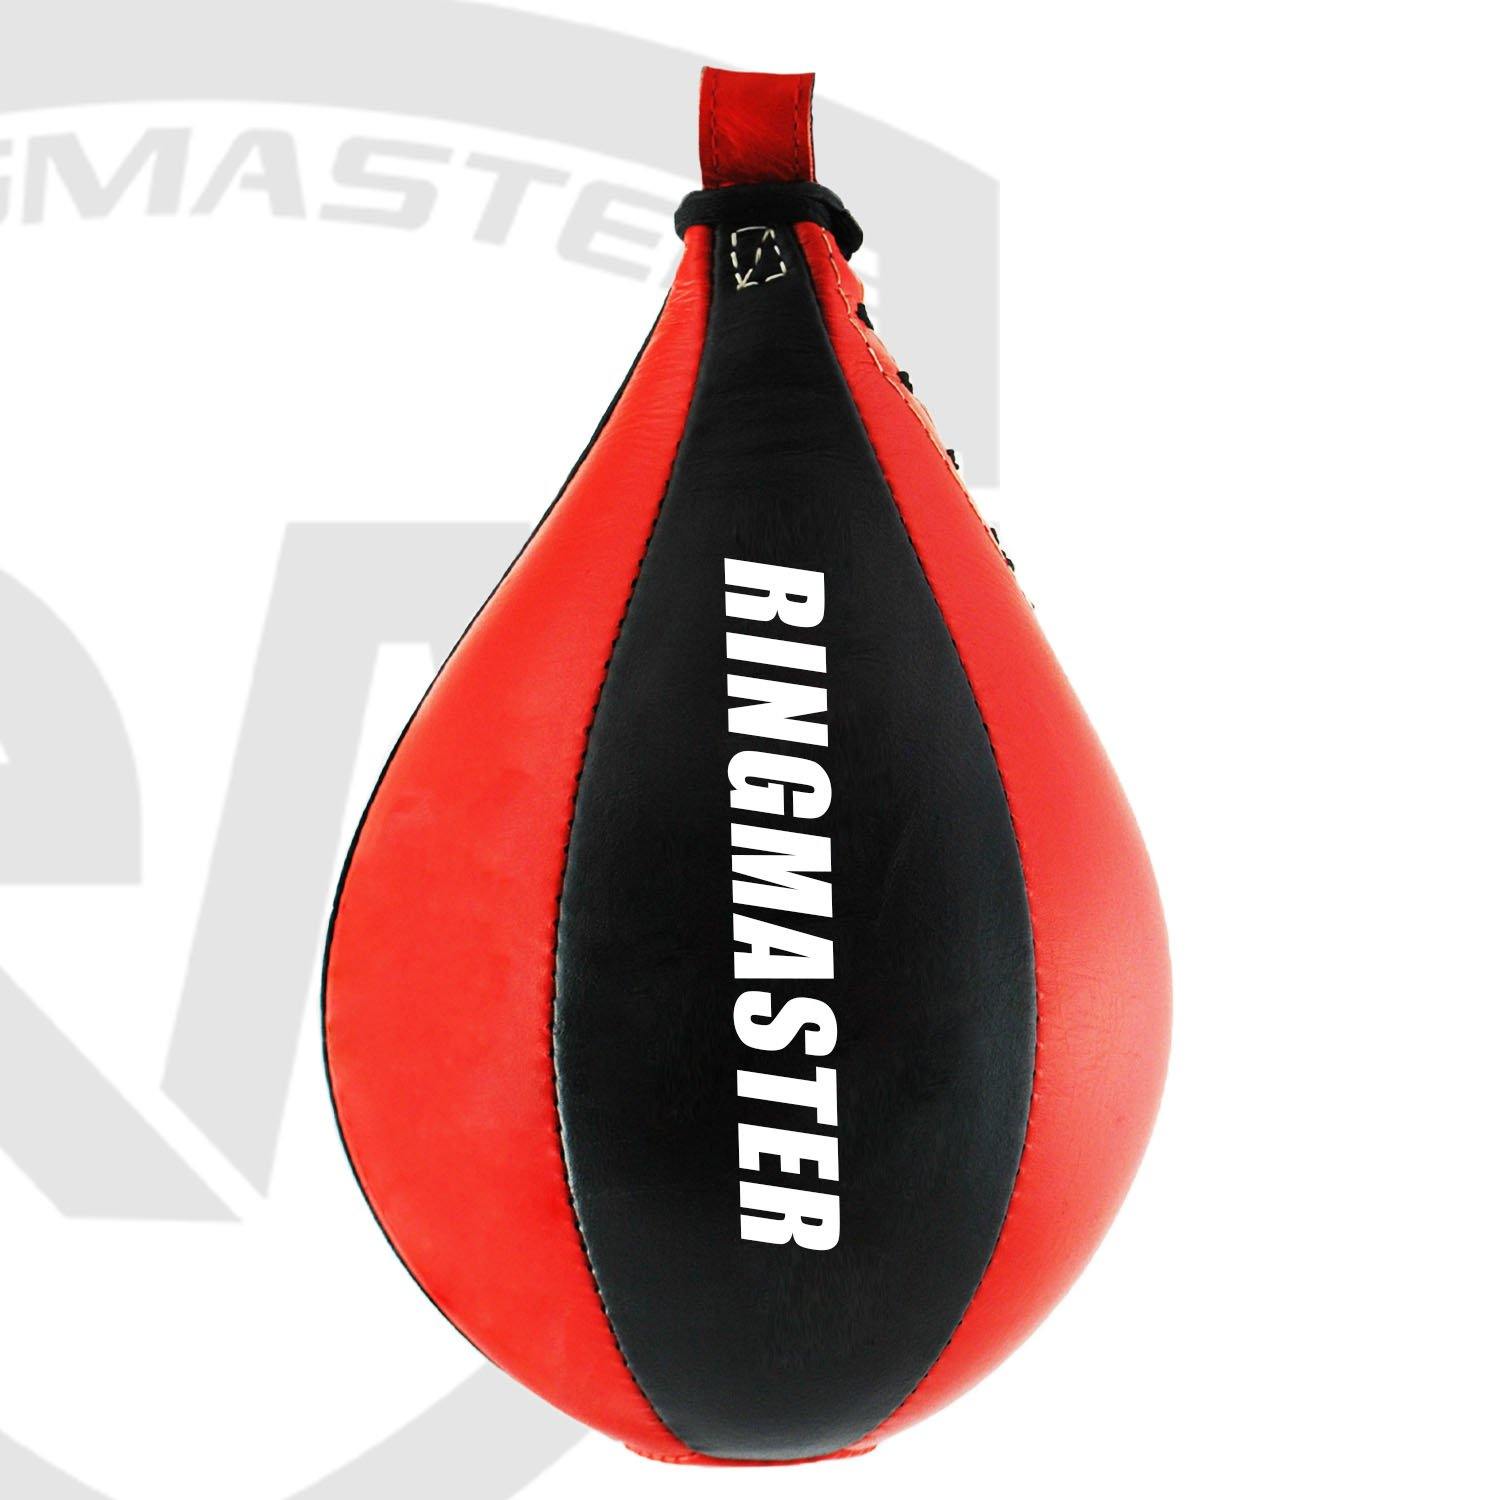 RingMaster Sports Speed Ball Genuine Leather Red/Black - RingMaster Sports